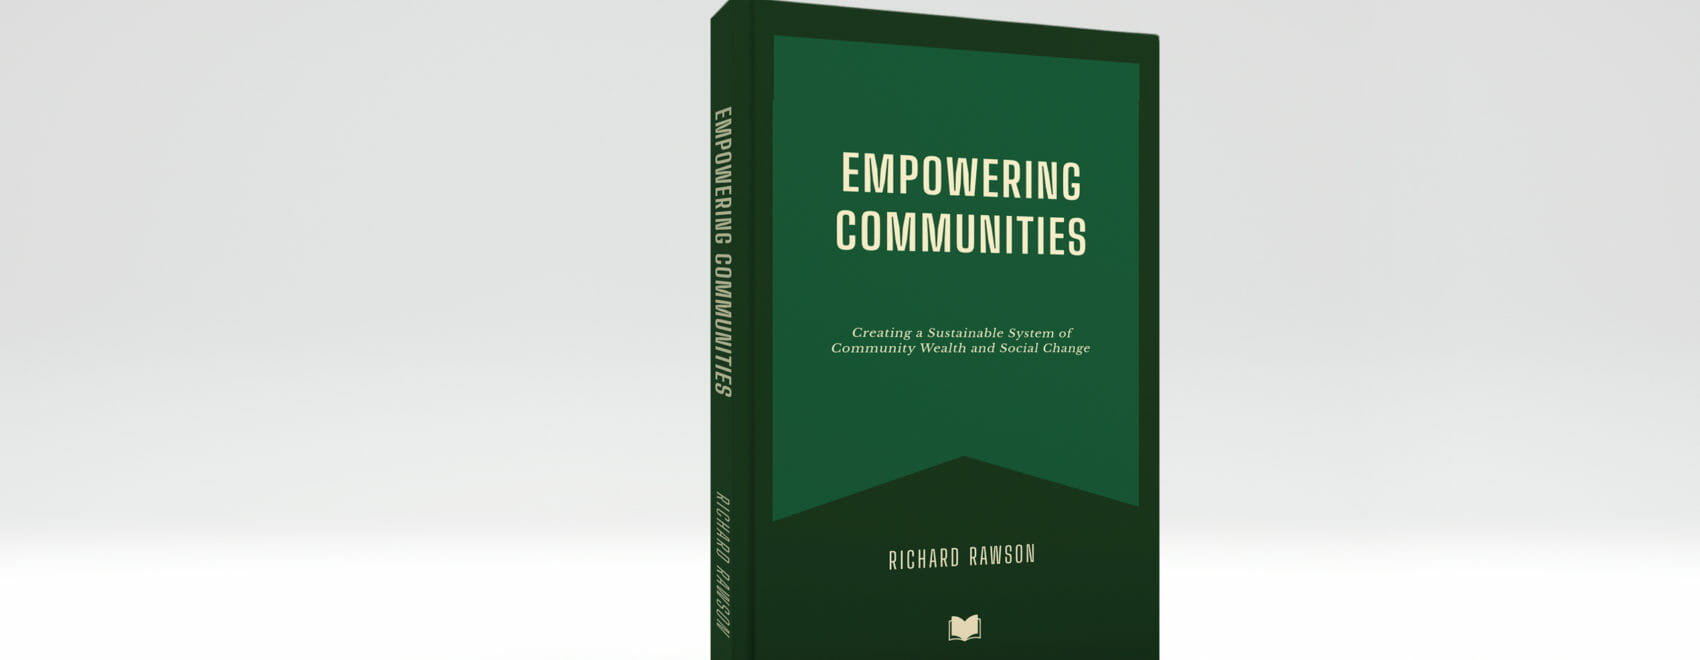 Empowering Communities book